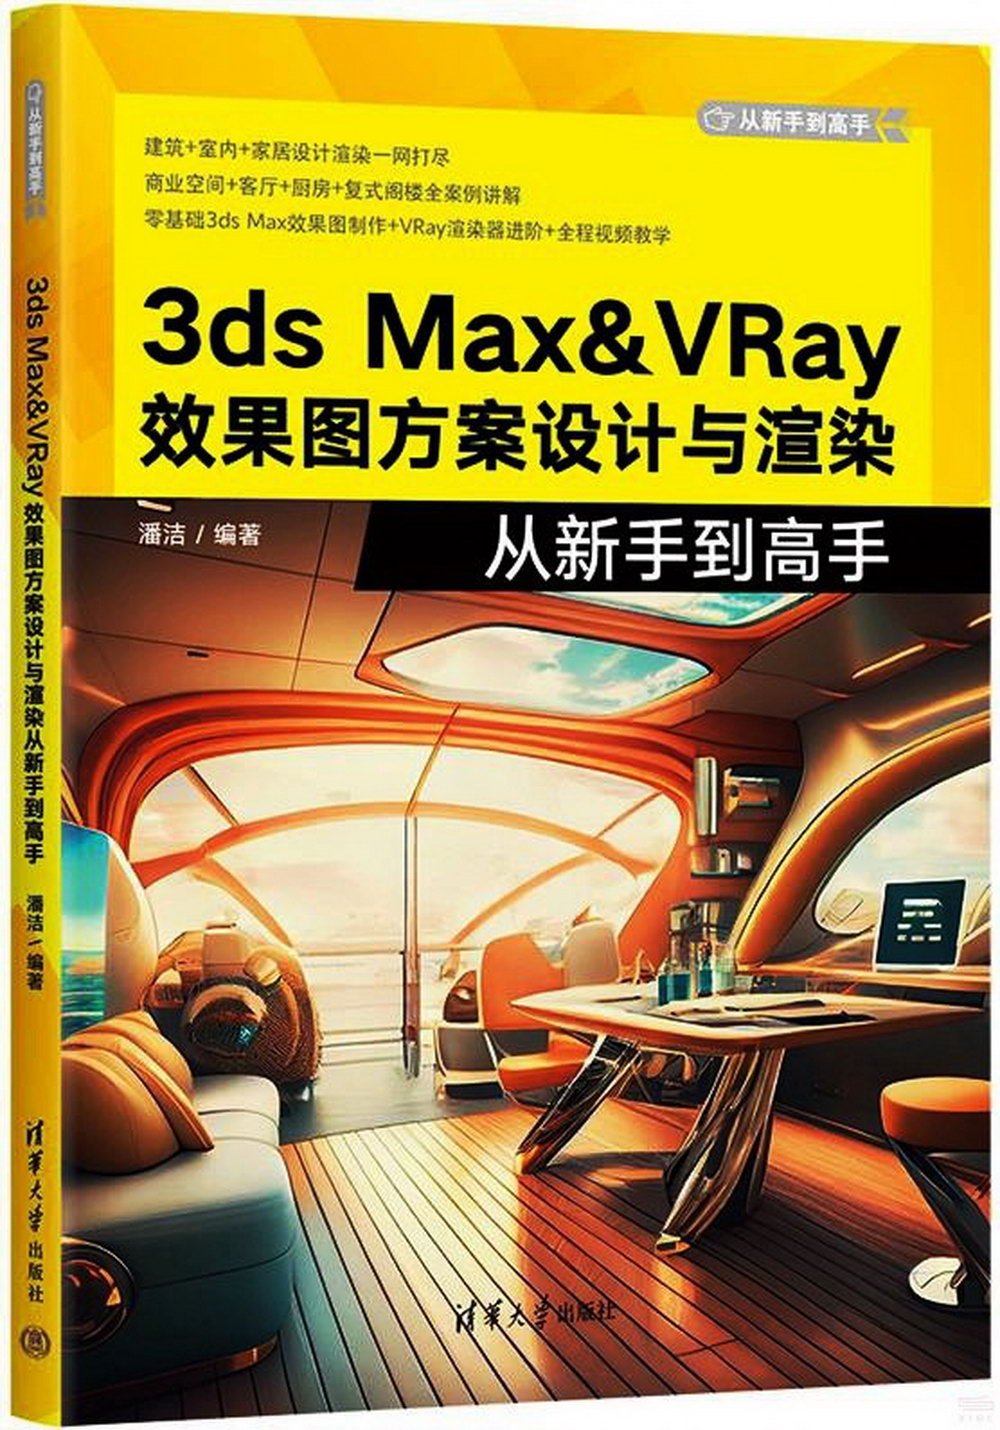 3ds Max&VRay 效果圖方案設計與渲染從新手到高手